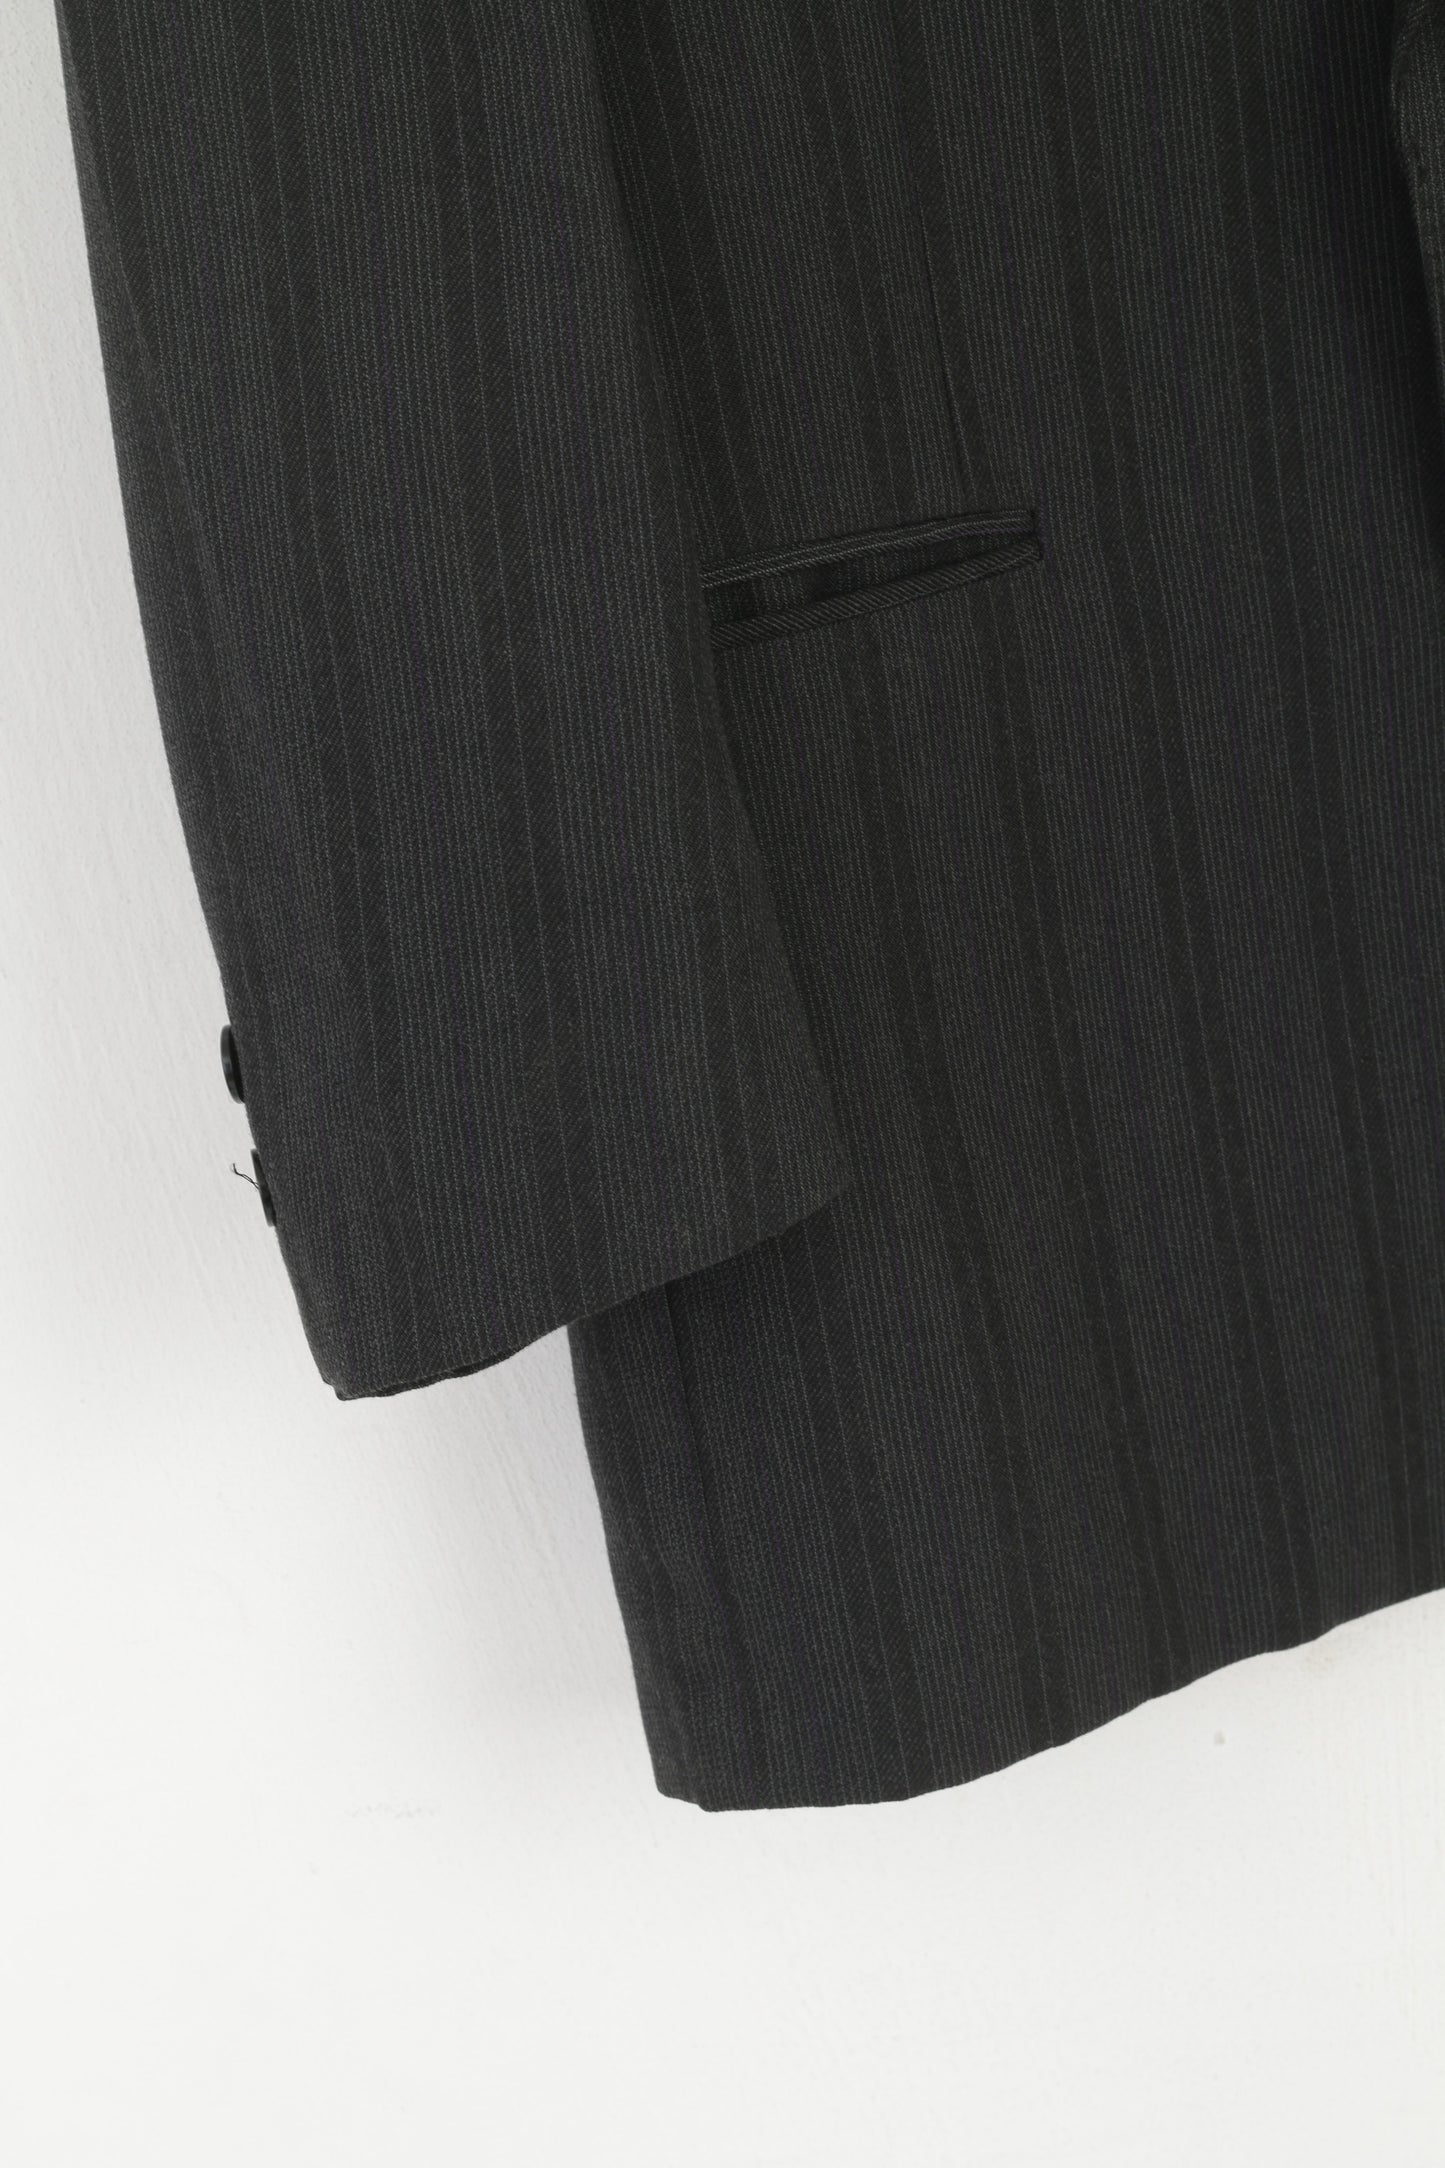 Yves Saint Laurent Men 38 Blazer Charcoal Striped Wool Single Breasted France Jacket